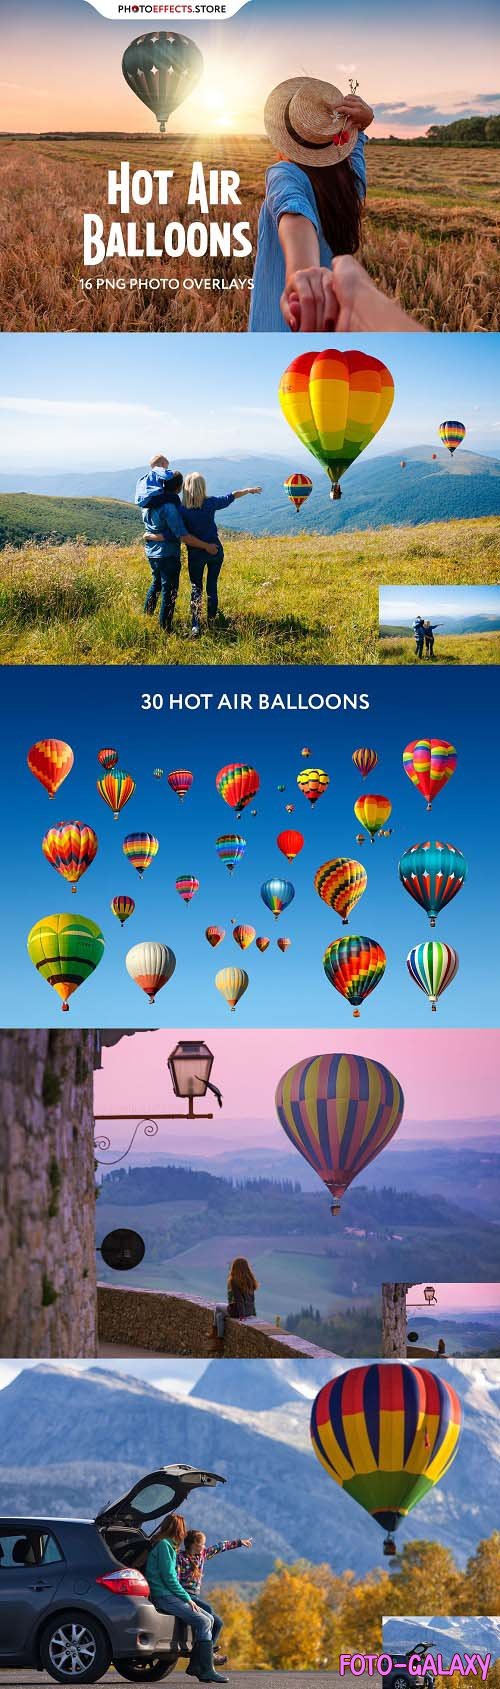 16 Hot Air Balloons Photo Overlays - 6564329